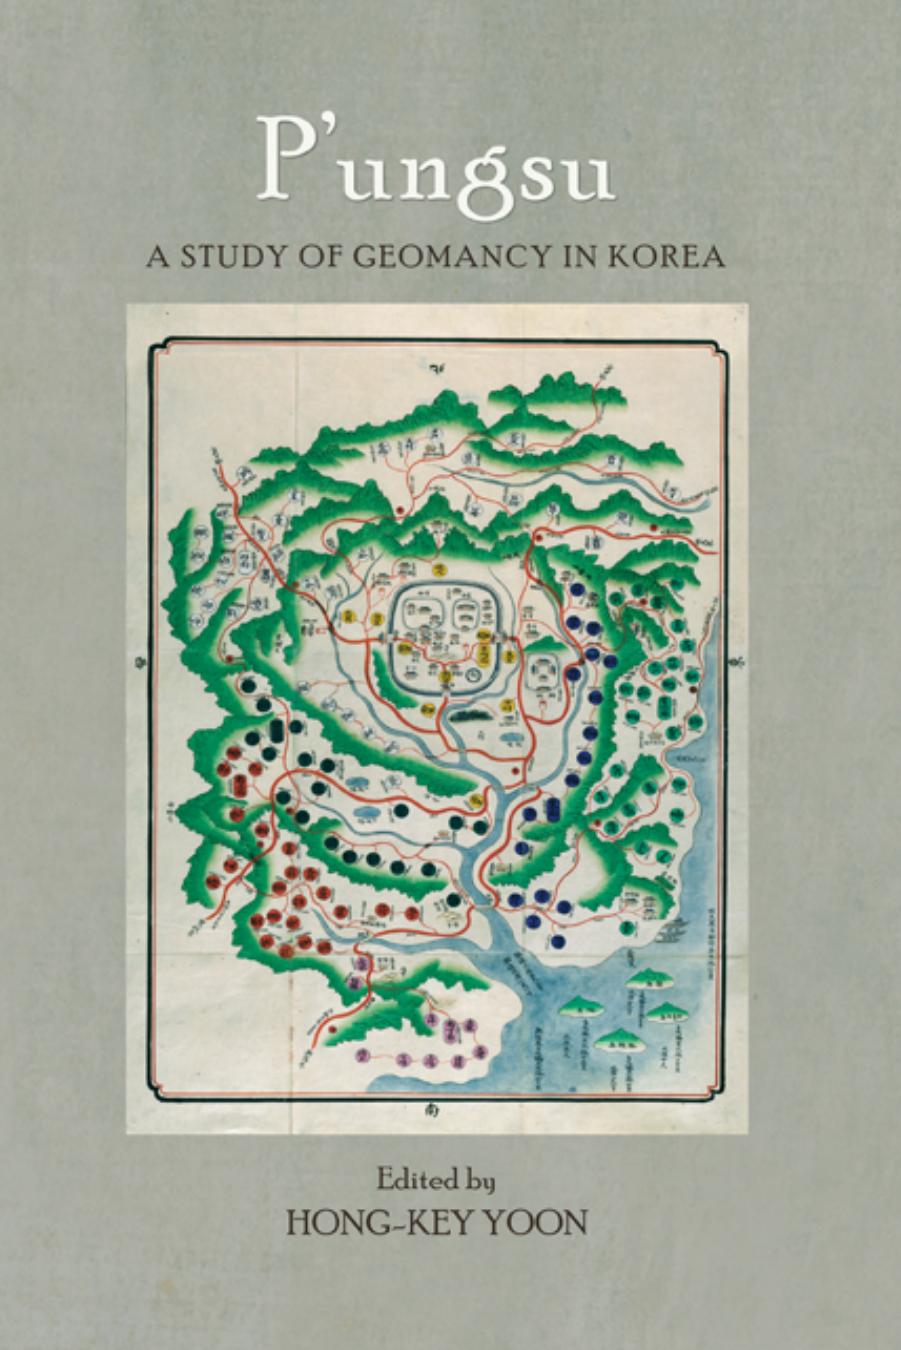 P'ungsu: A Study of Geomancy in Korea by Hong-key Yoon (editor)